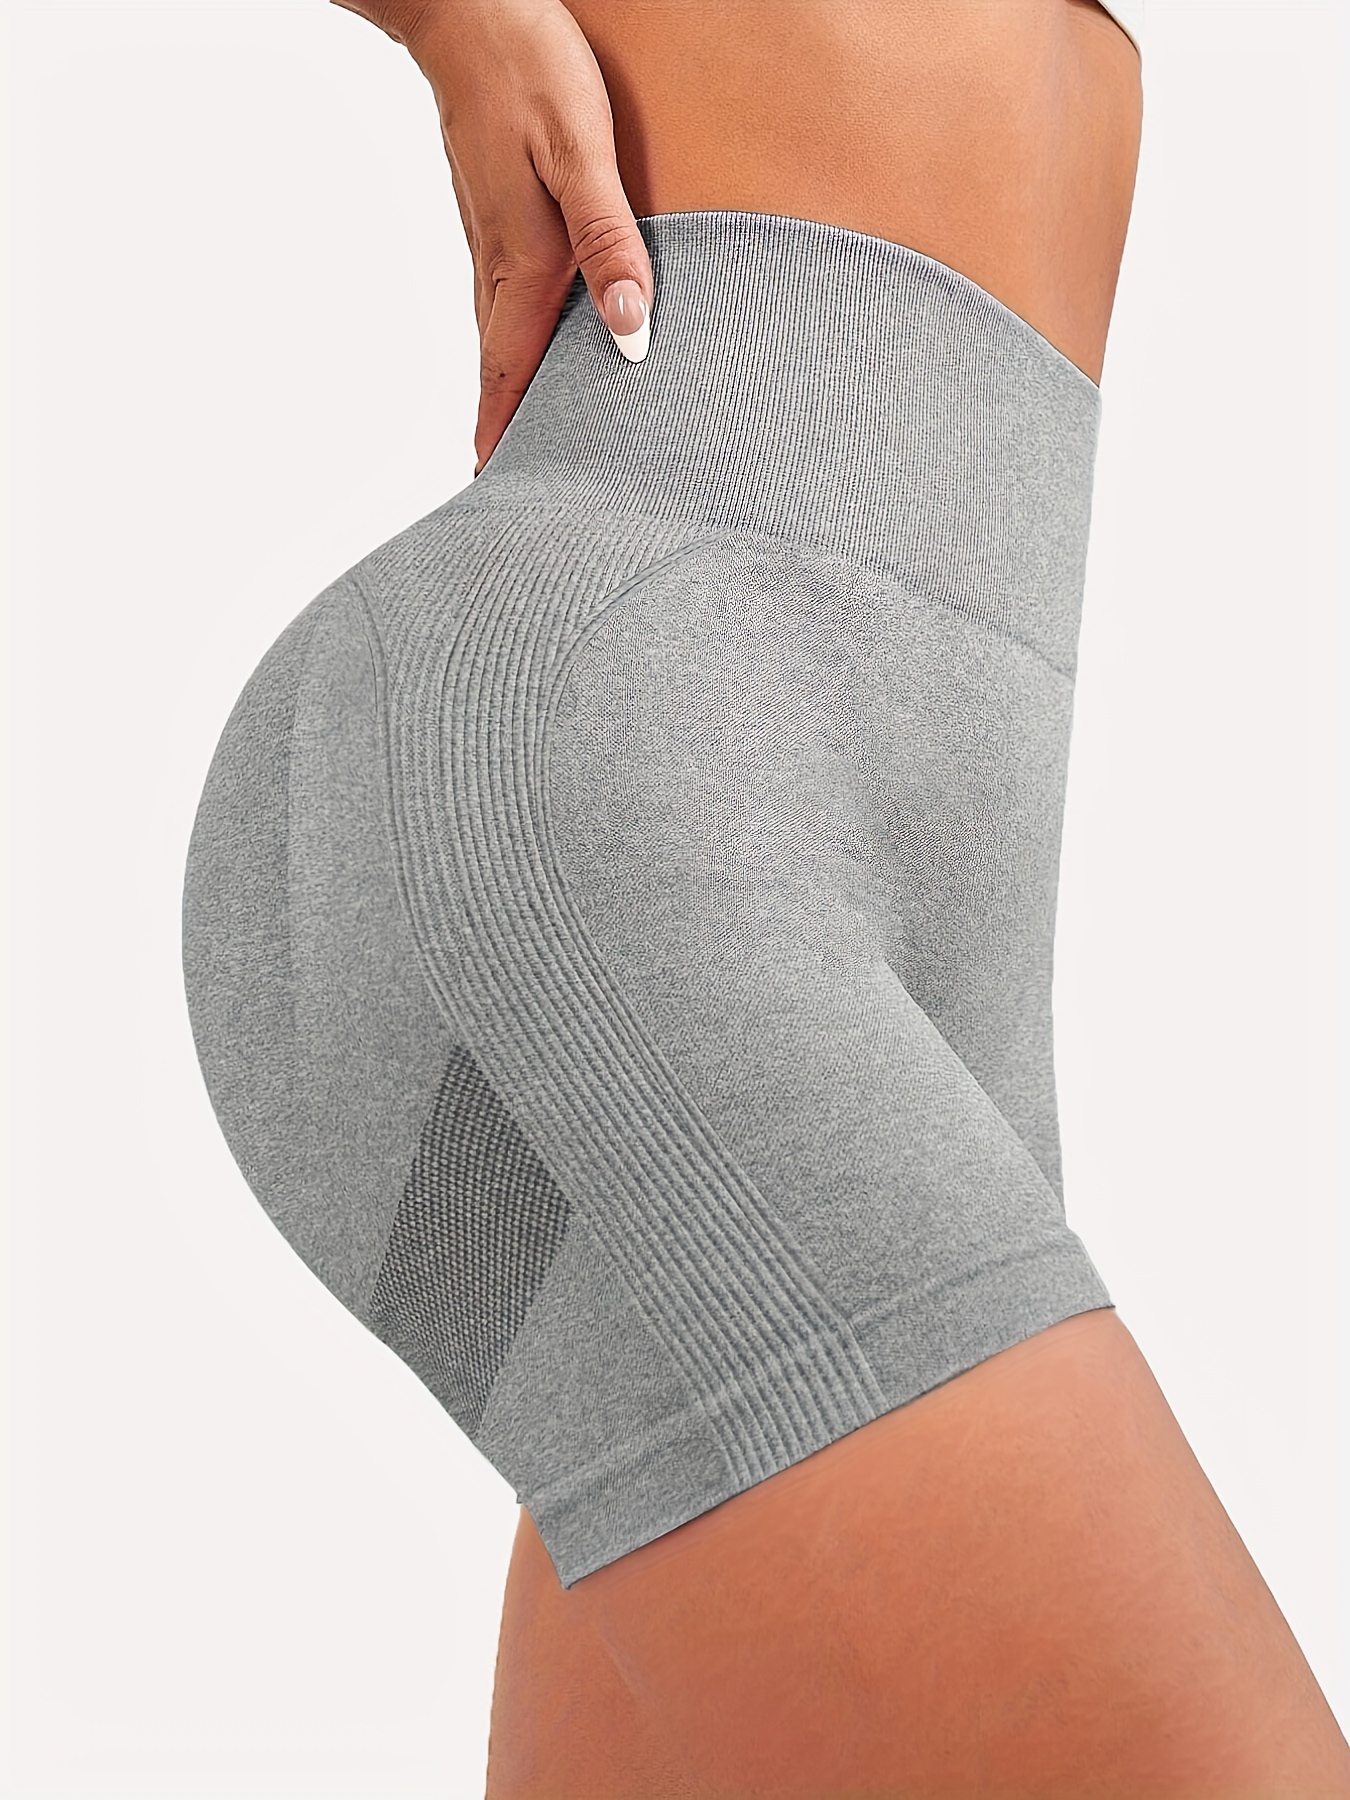 MRULIC yoga pants Shorts Fitness Hip Running High Biker Wrinkled Women Yoga  Waist Pants Stretch Yoga Pants Grey + XXL 